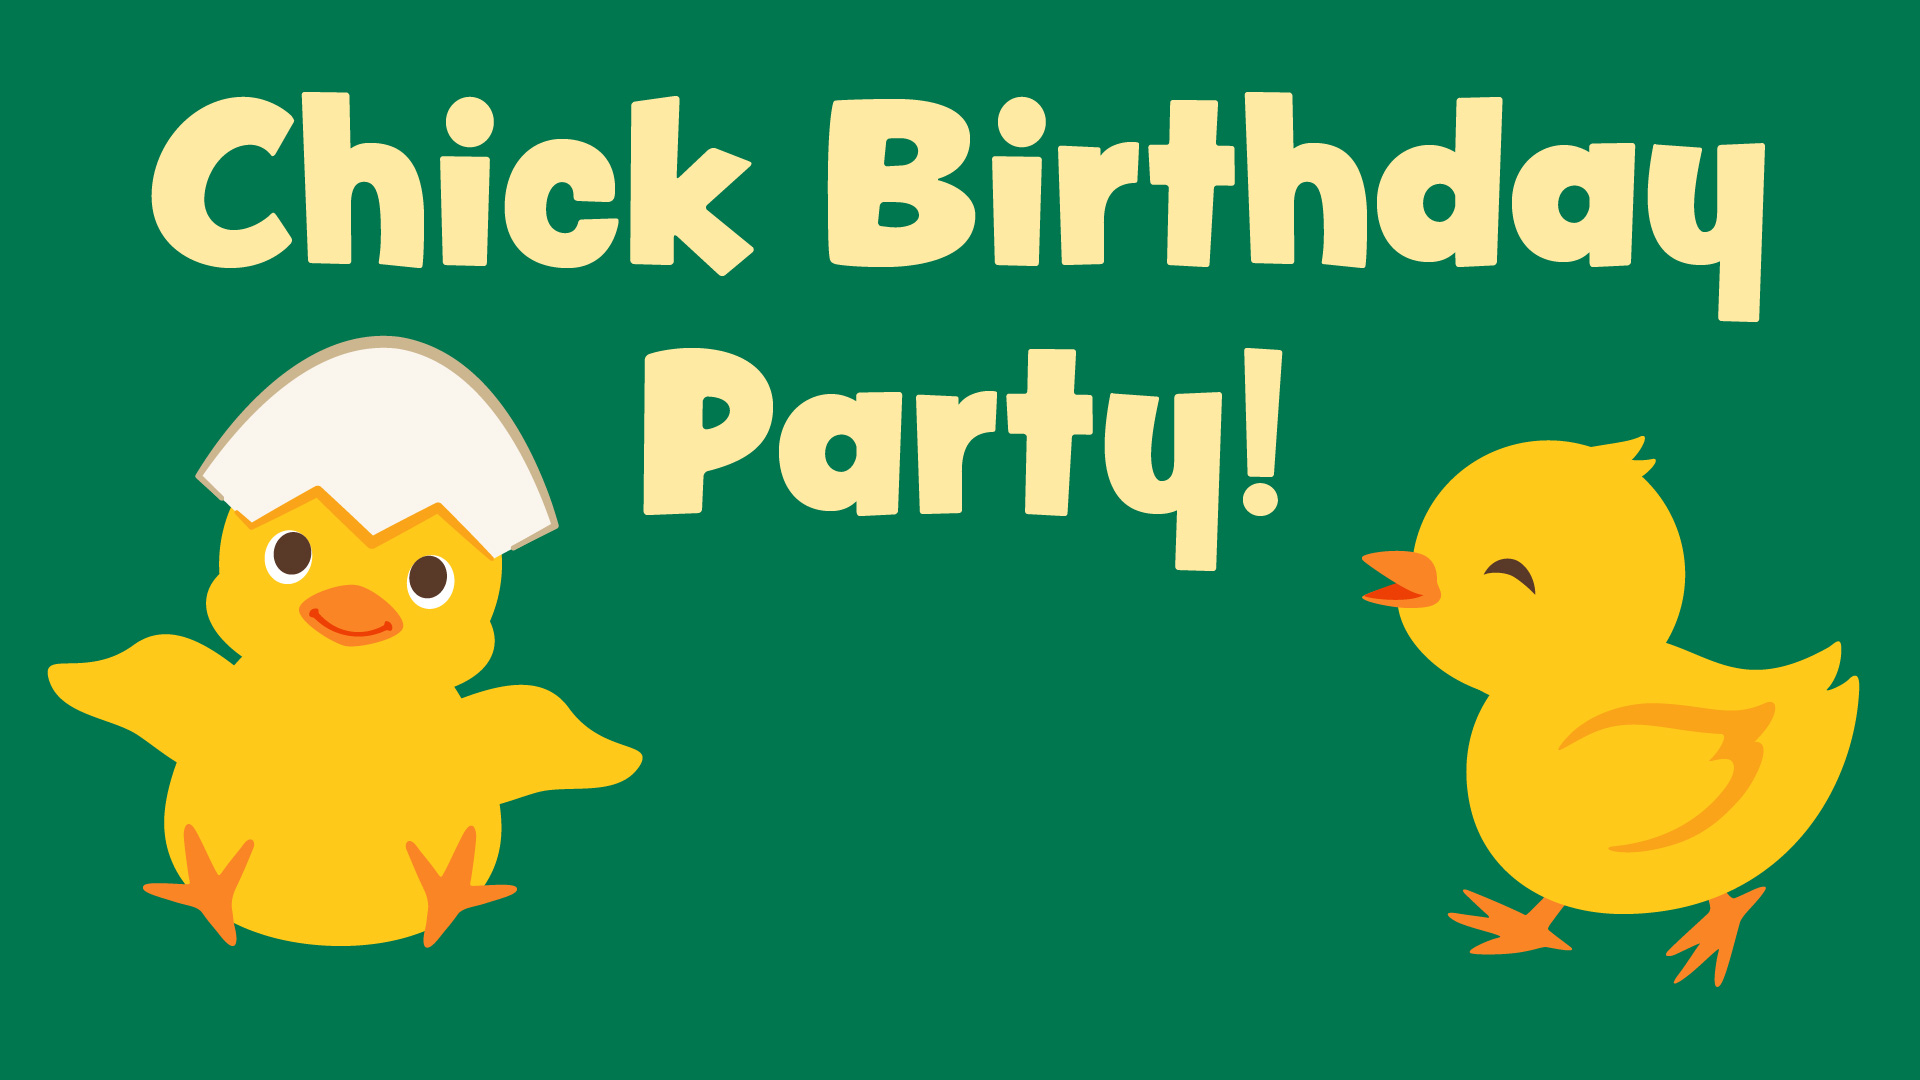 Chicken Birthday Party! 